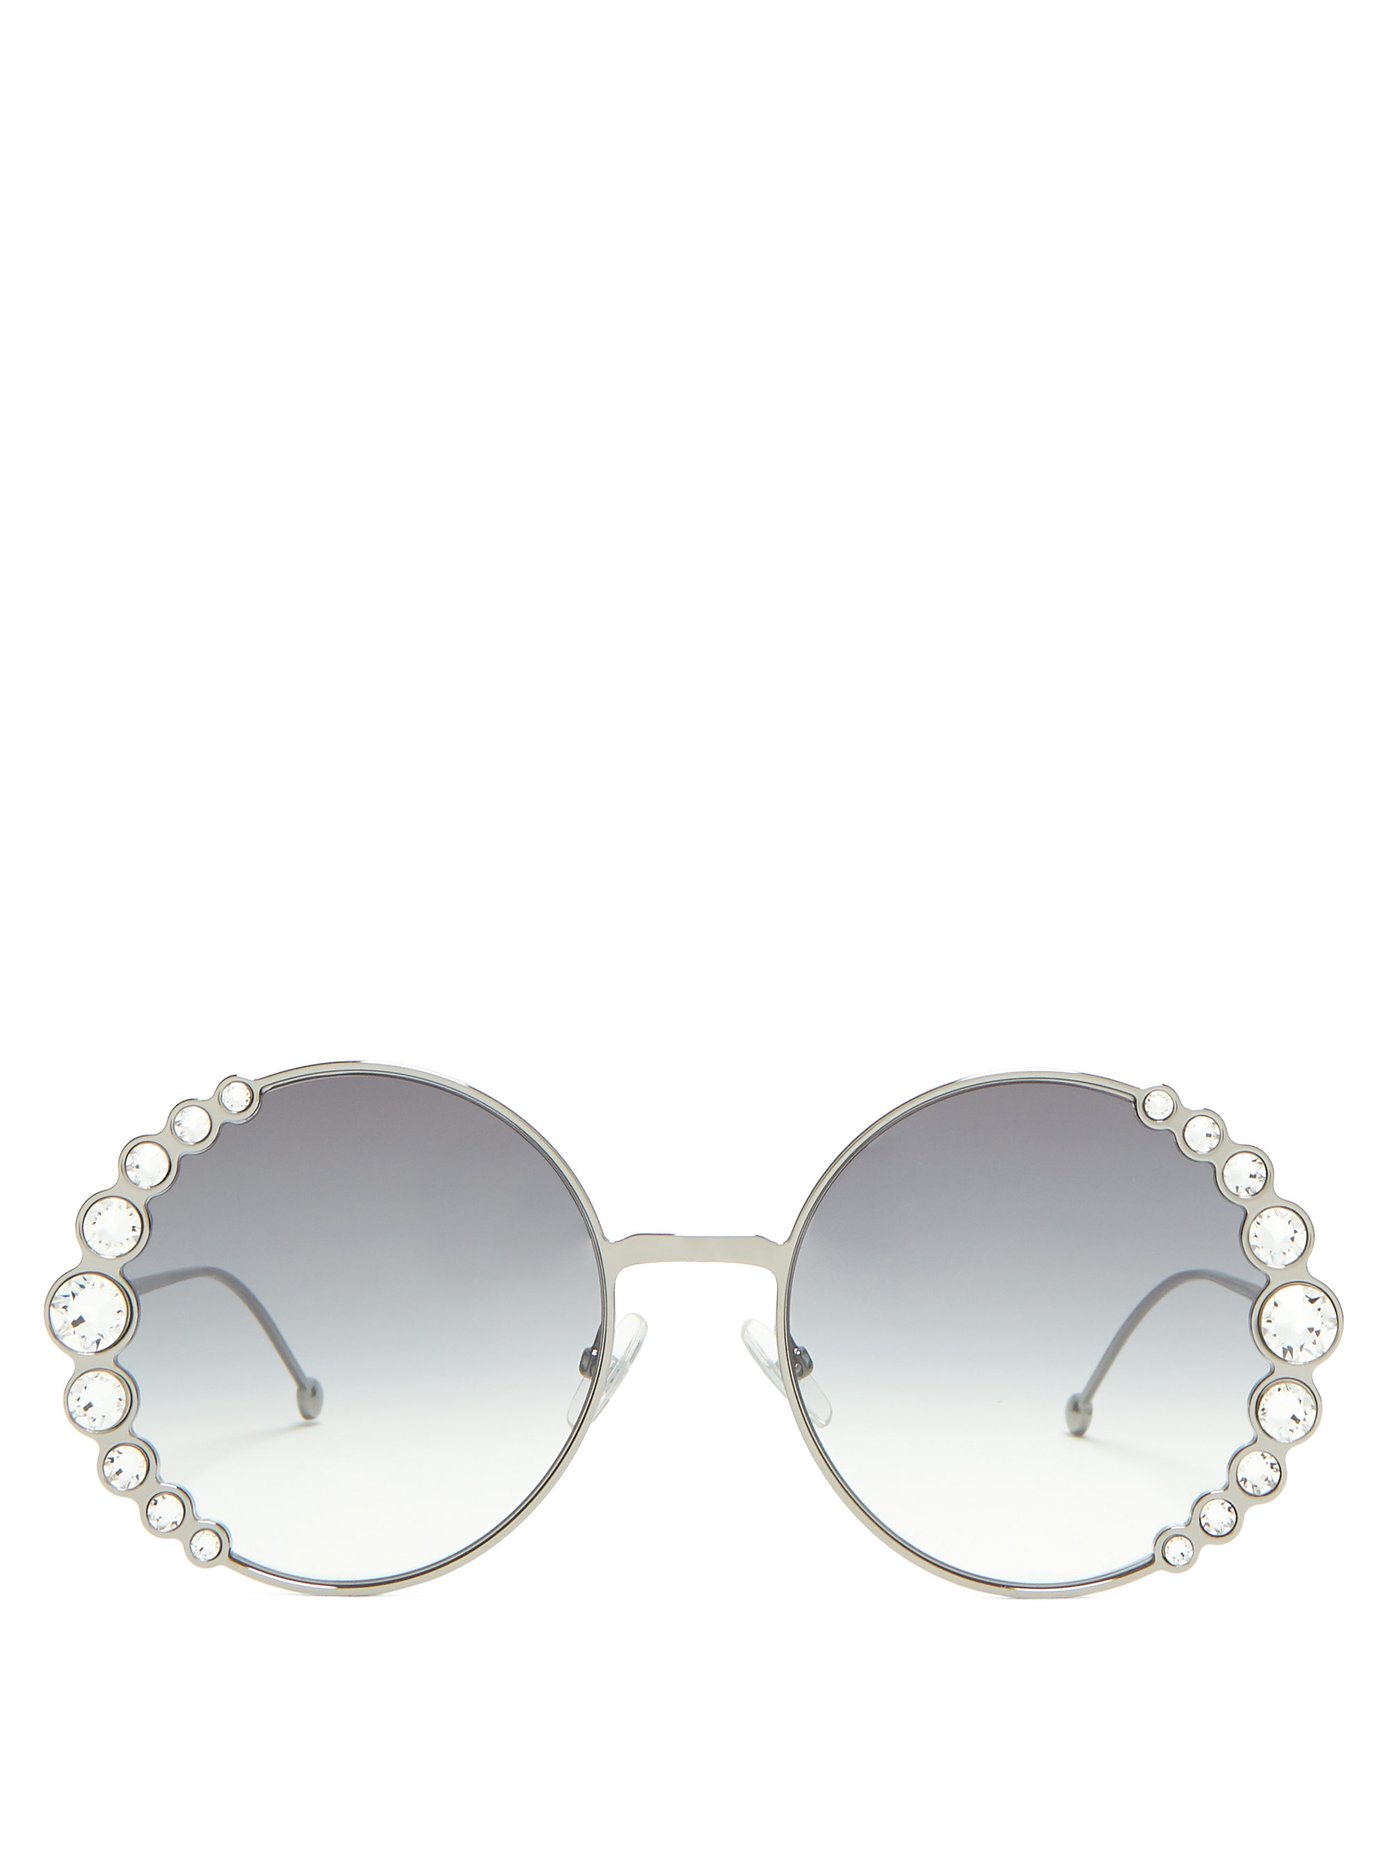 fendi embellished sunglasses